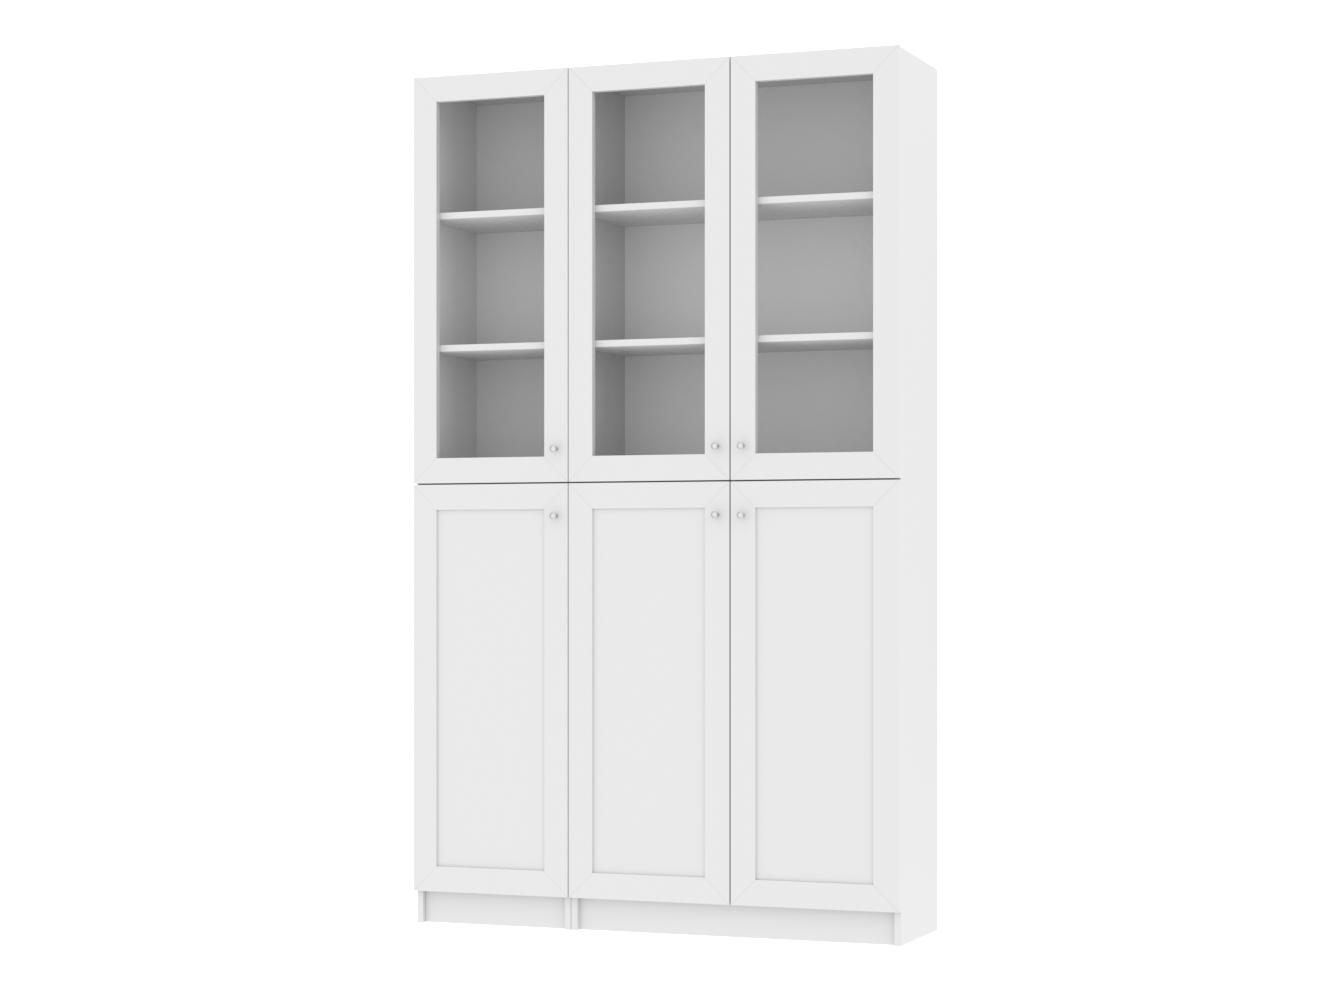 Книжный шкаф Билли 338 white desire ИКЕА (IKEA) изображение товара